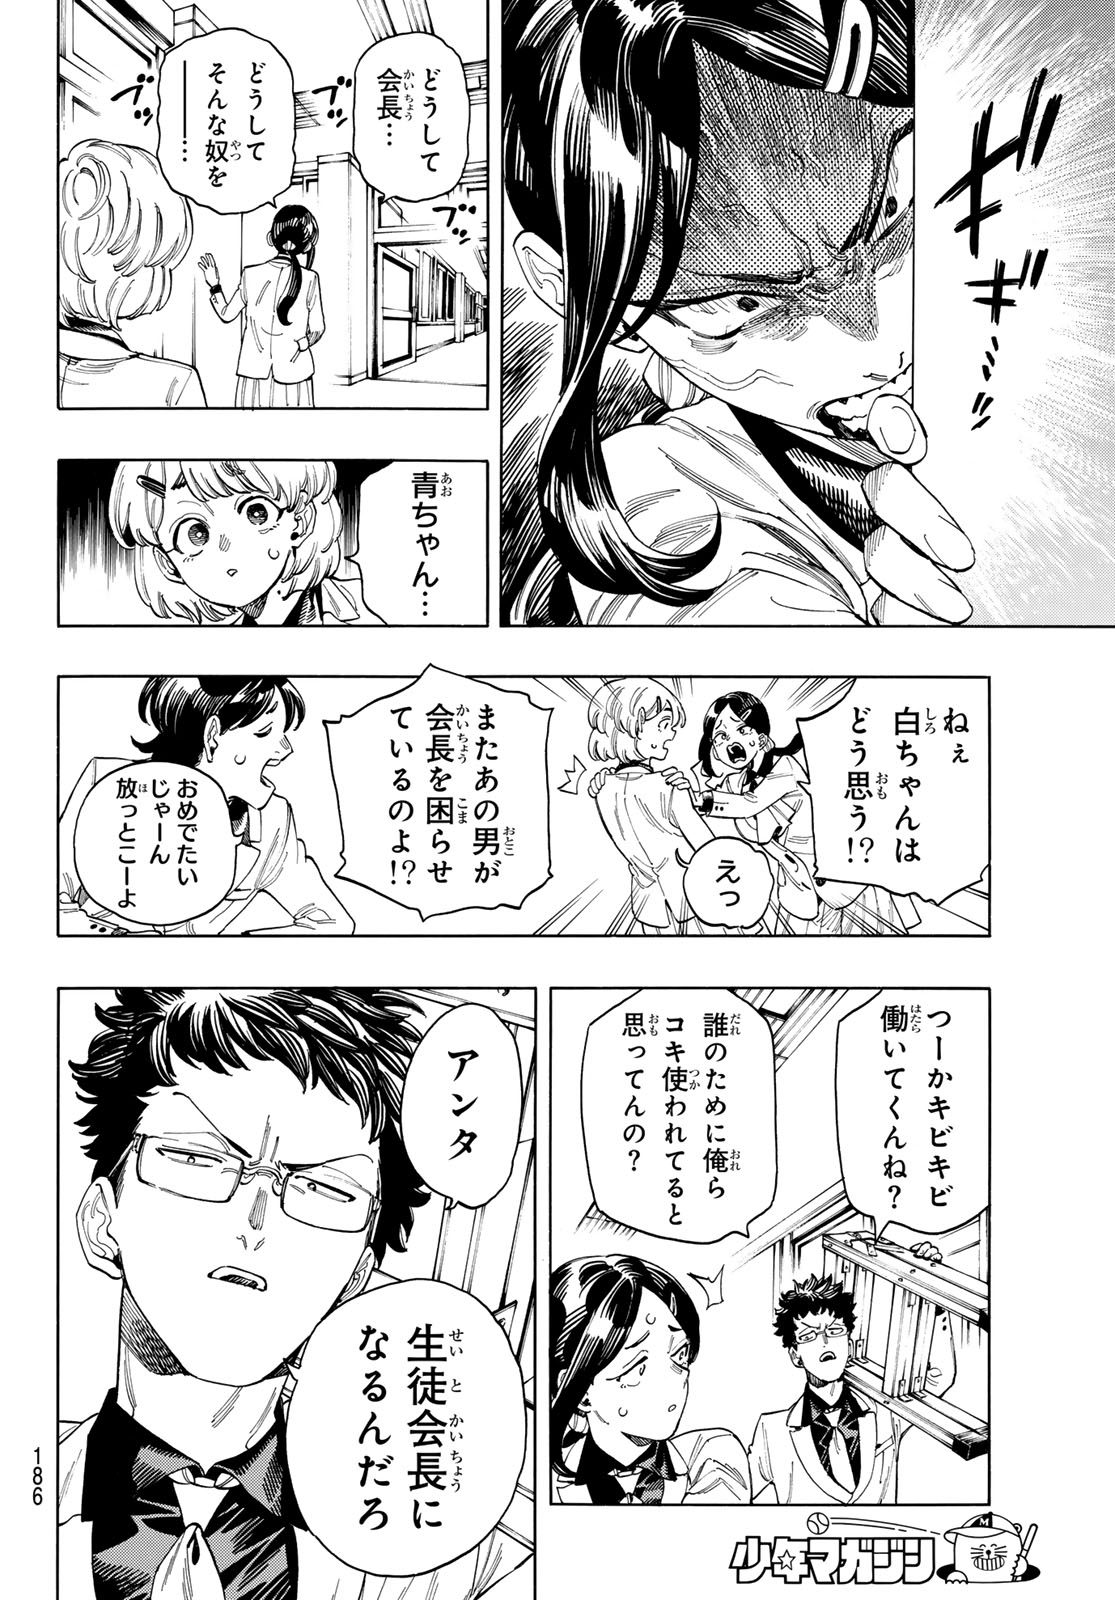 Akabane Honeko no Bodyguard - Chapter 78 - Page 8